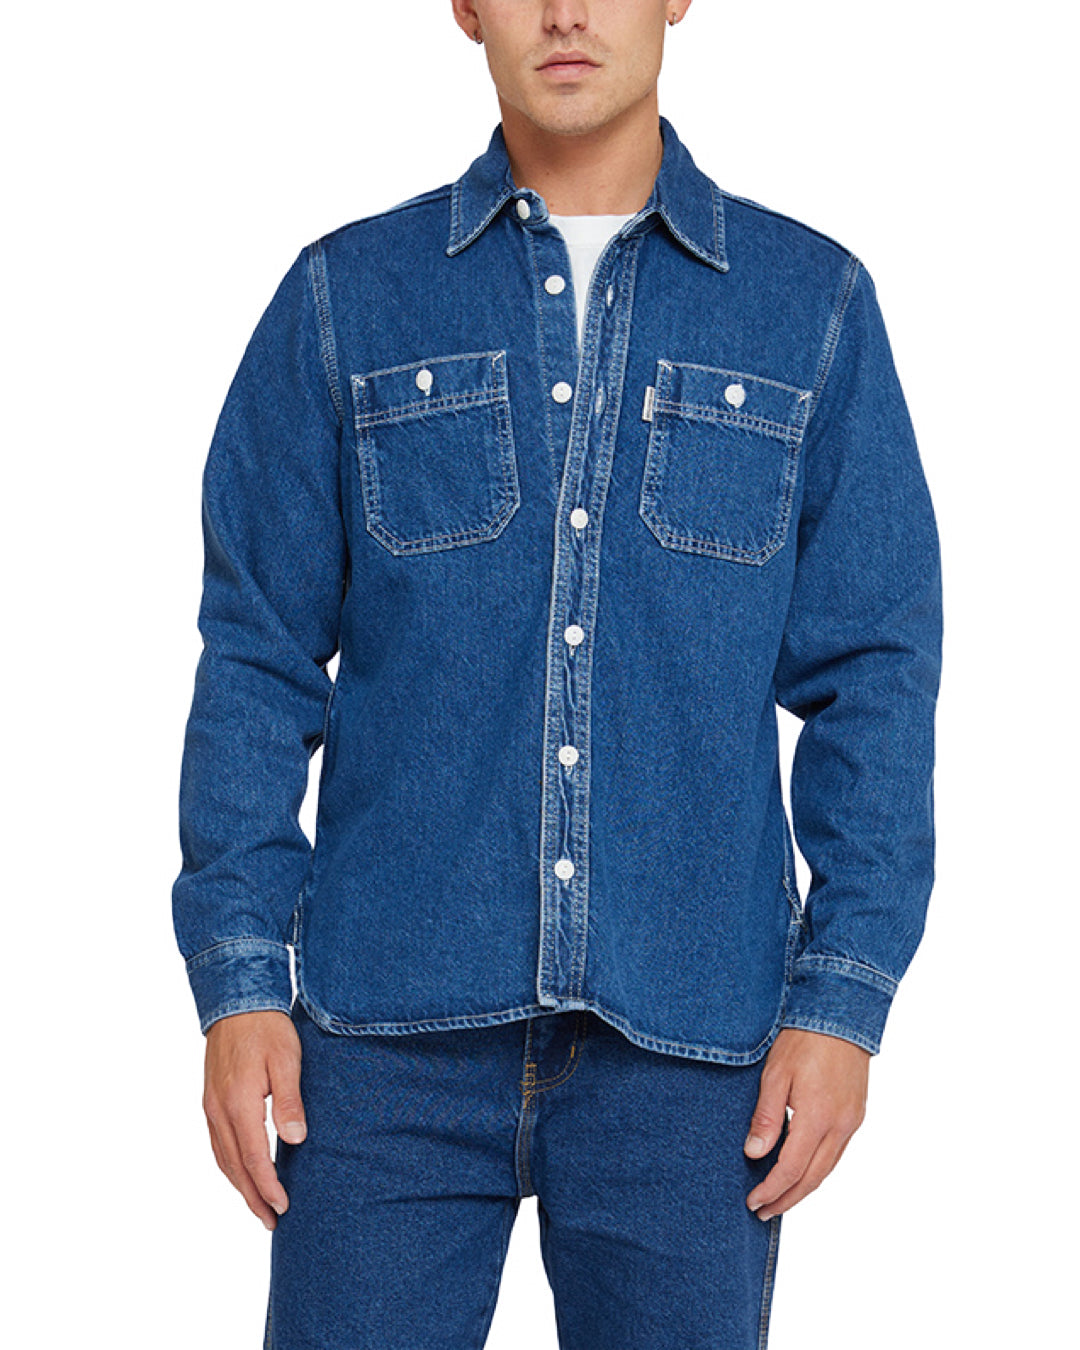 Mens Heavy Duty Denim Jeans Shirt Cotton Casual Top Flap Pocket Work Shirts  | eBay